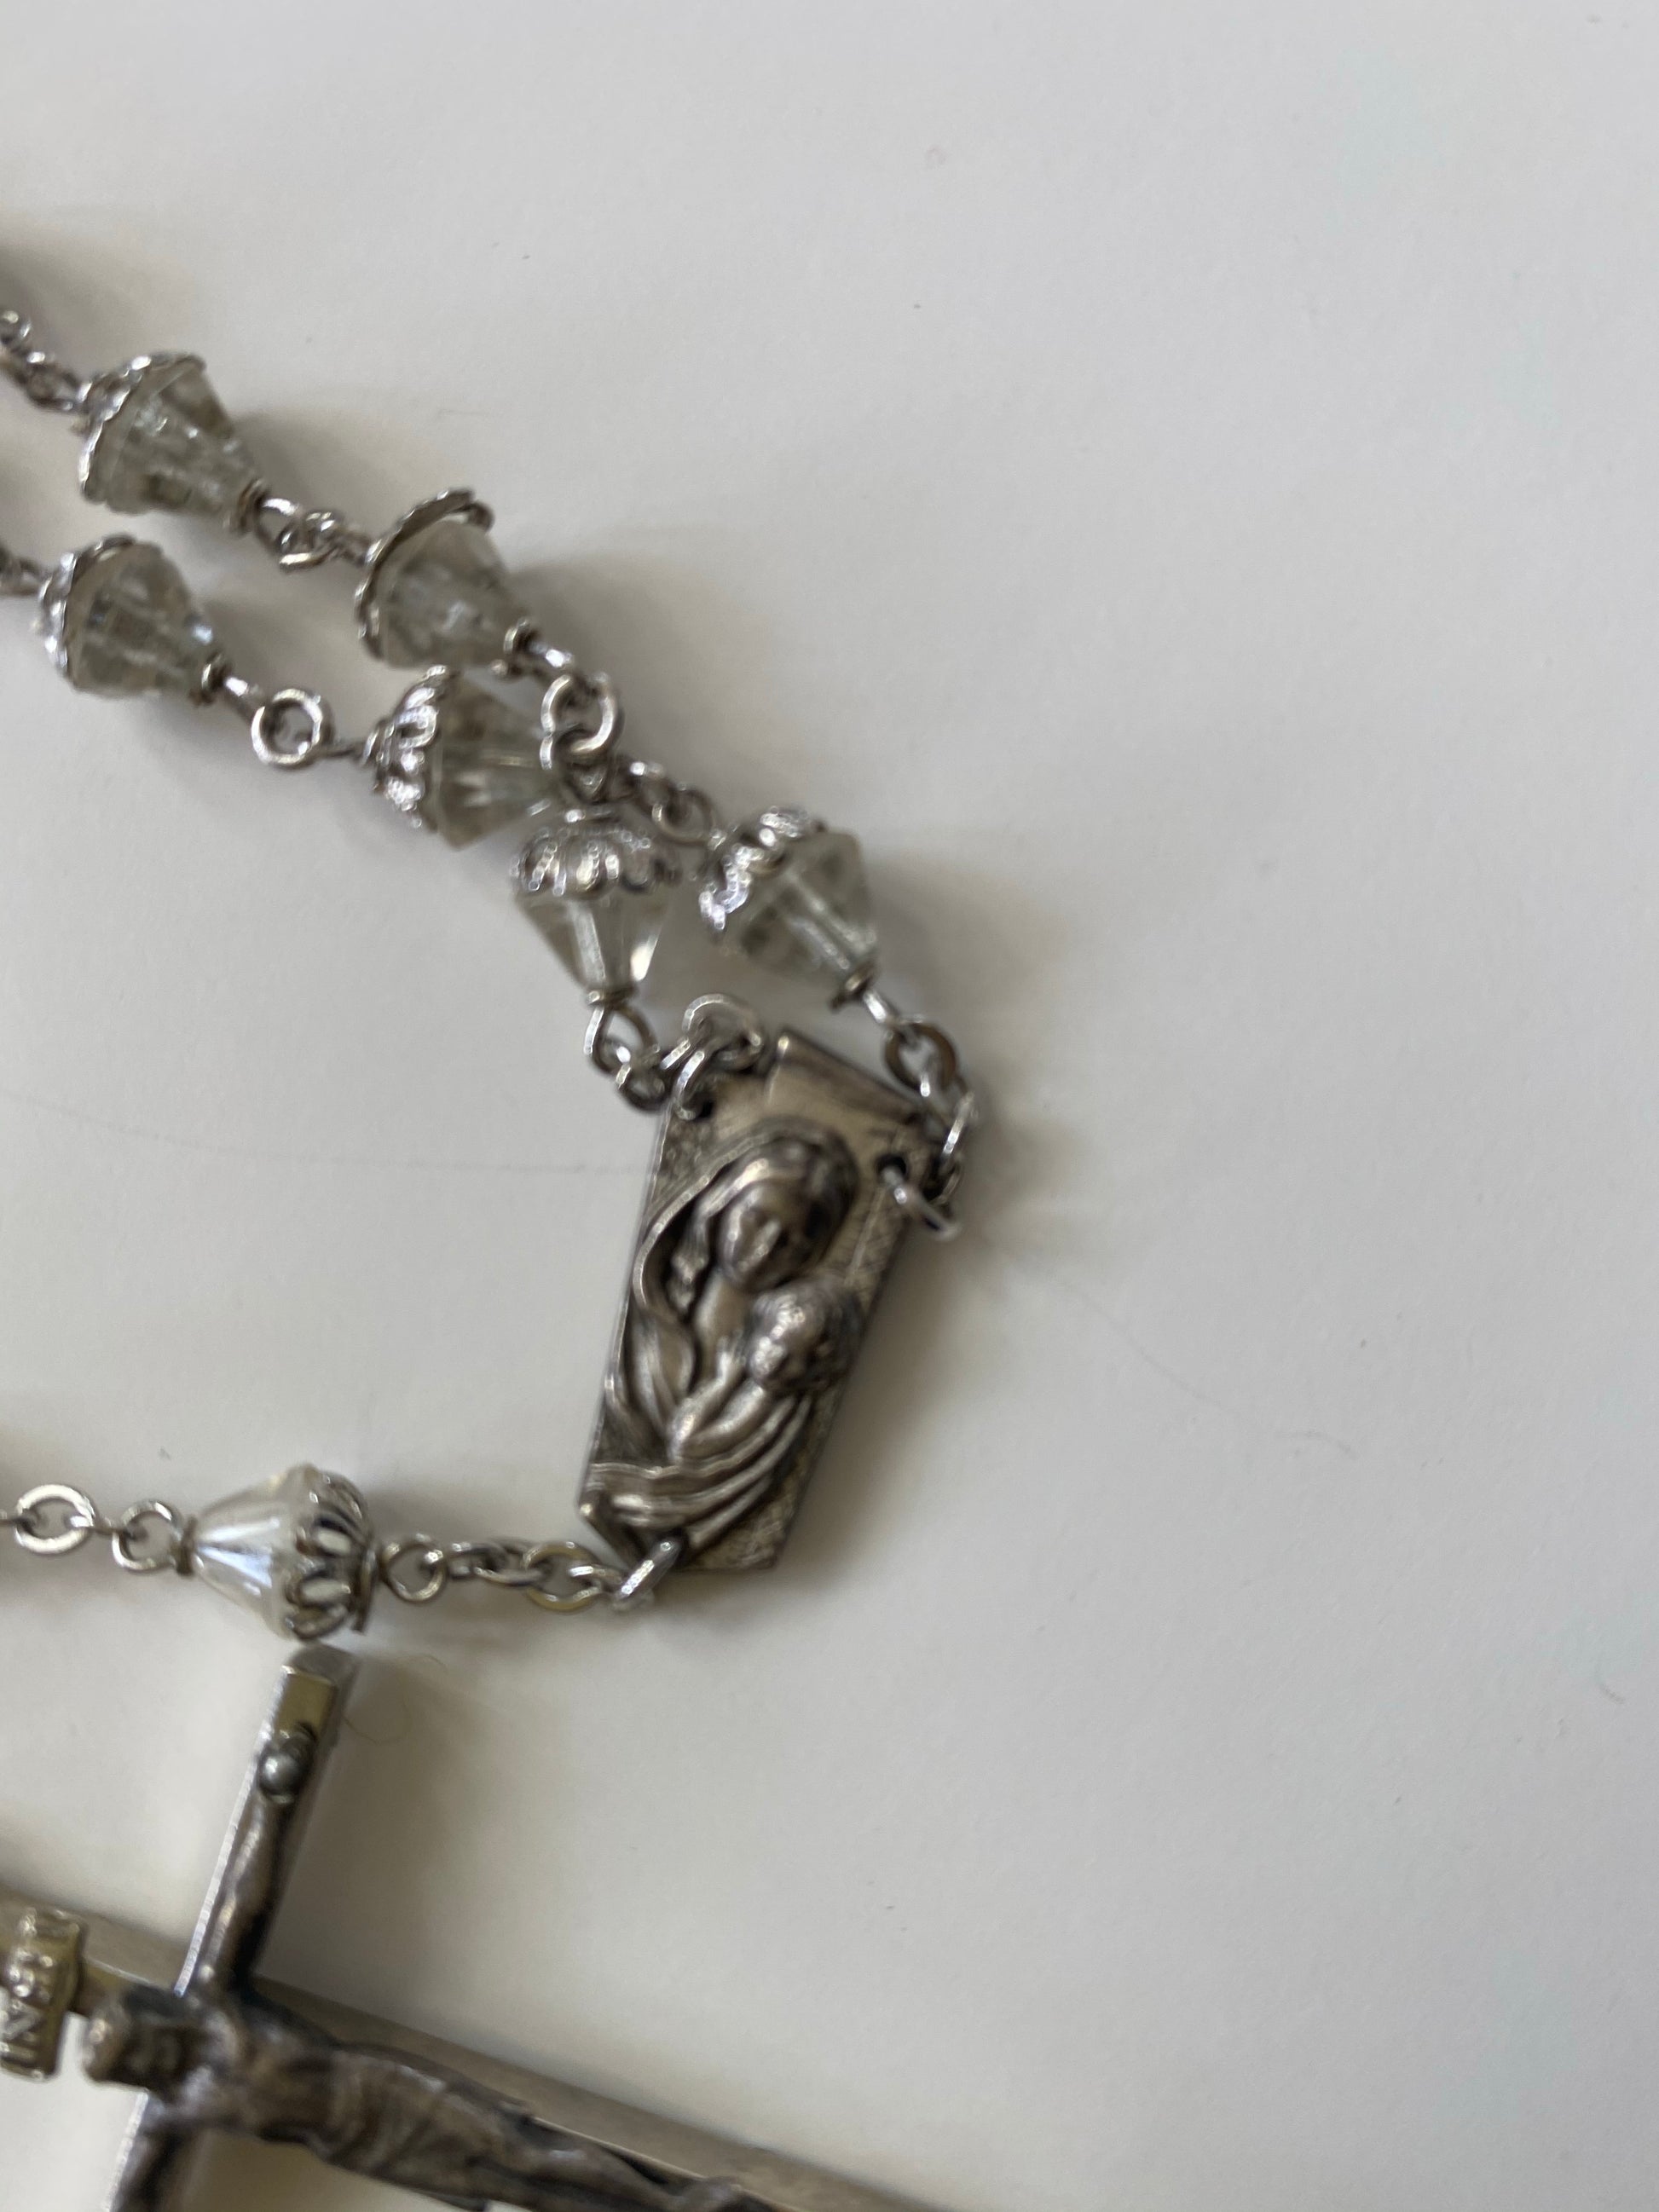 Vintage Crystal Rosary Bead Necklace - Ola Wyola